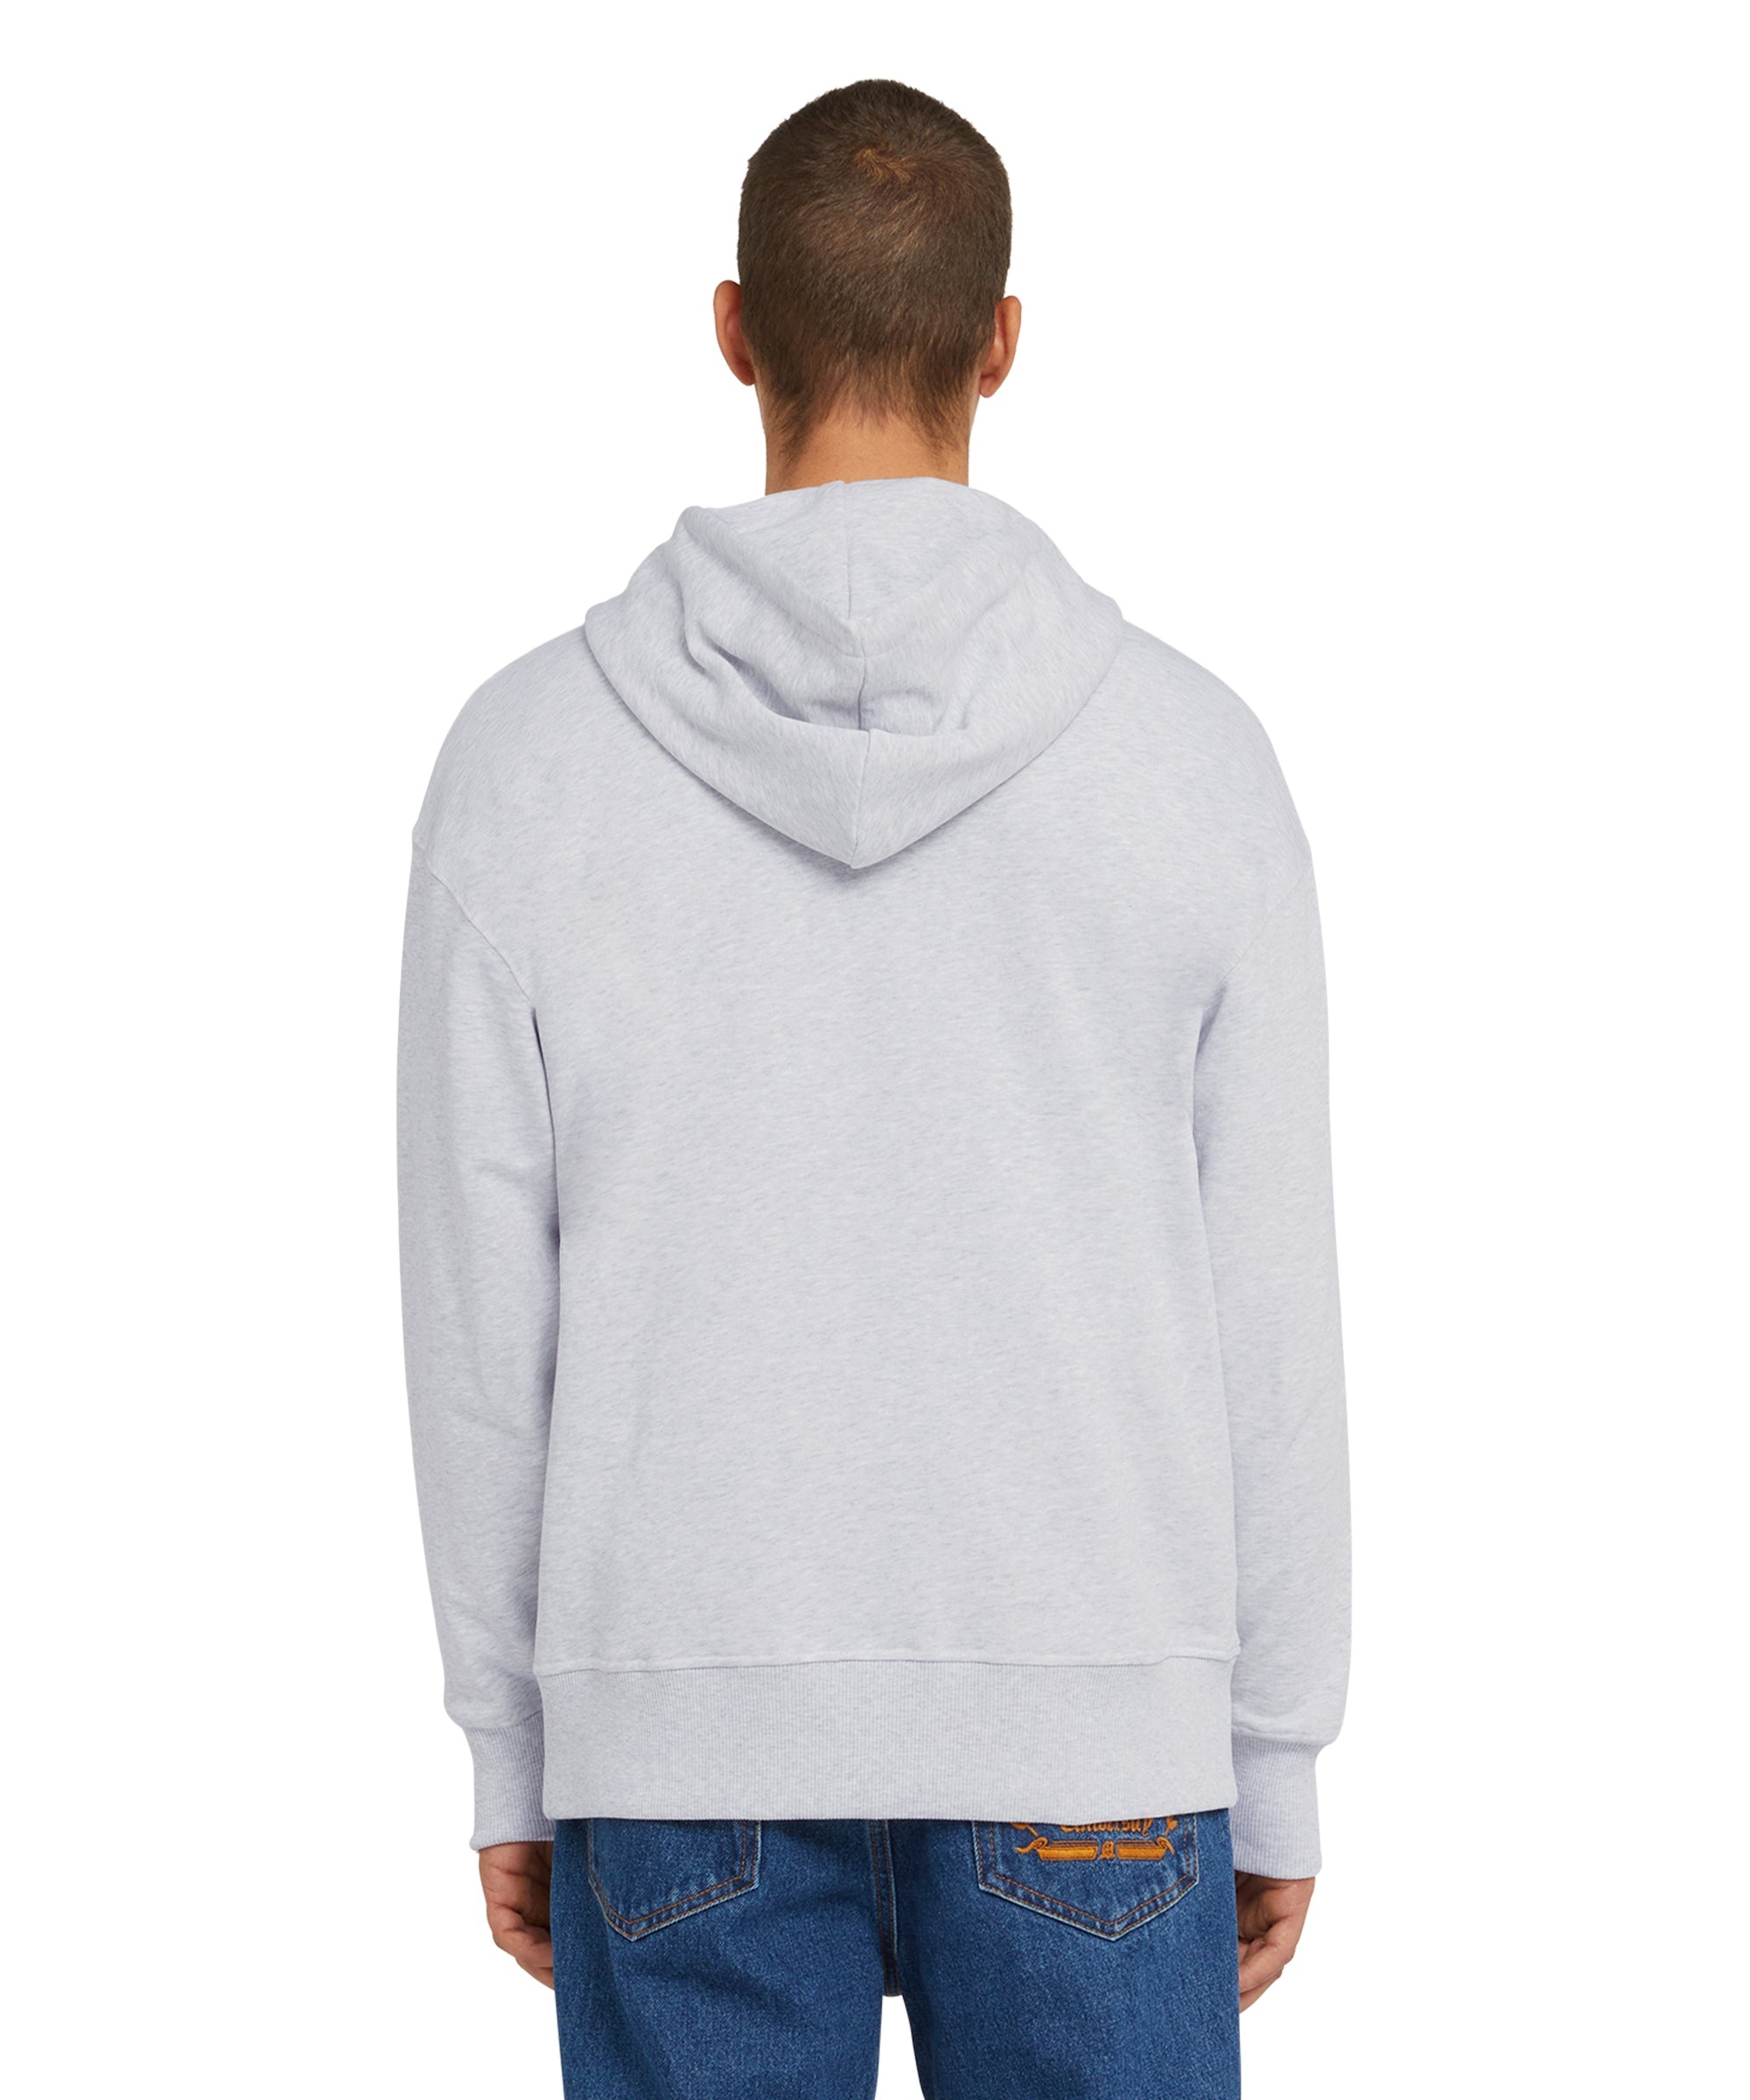 Cotton sweatshirt with hood and micro logo - 3